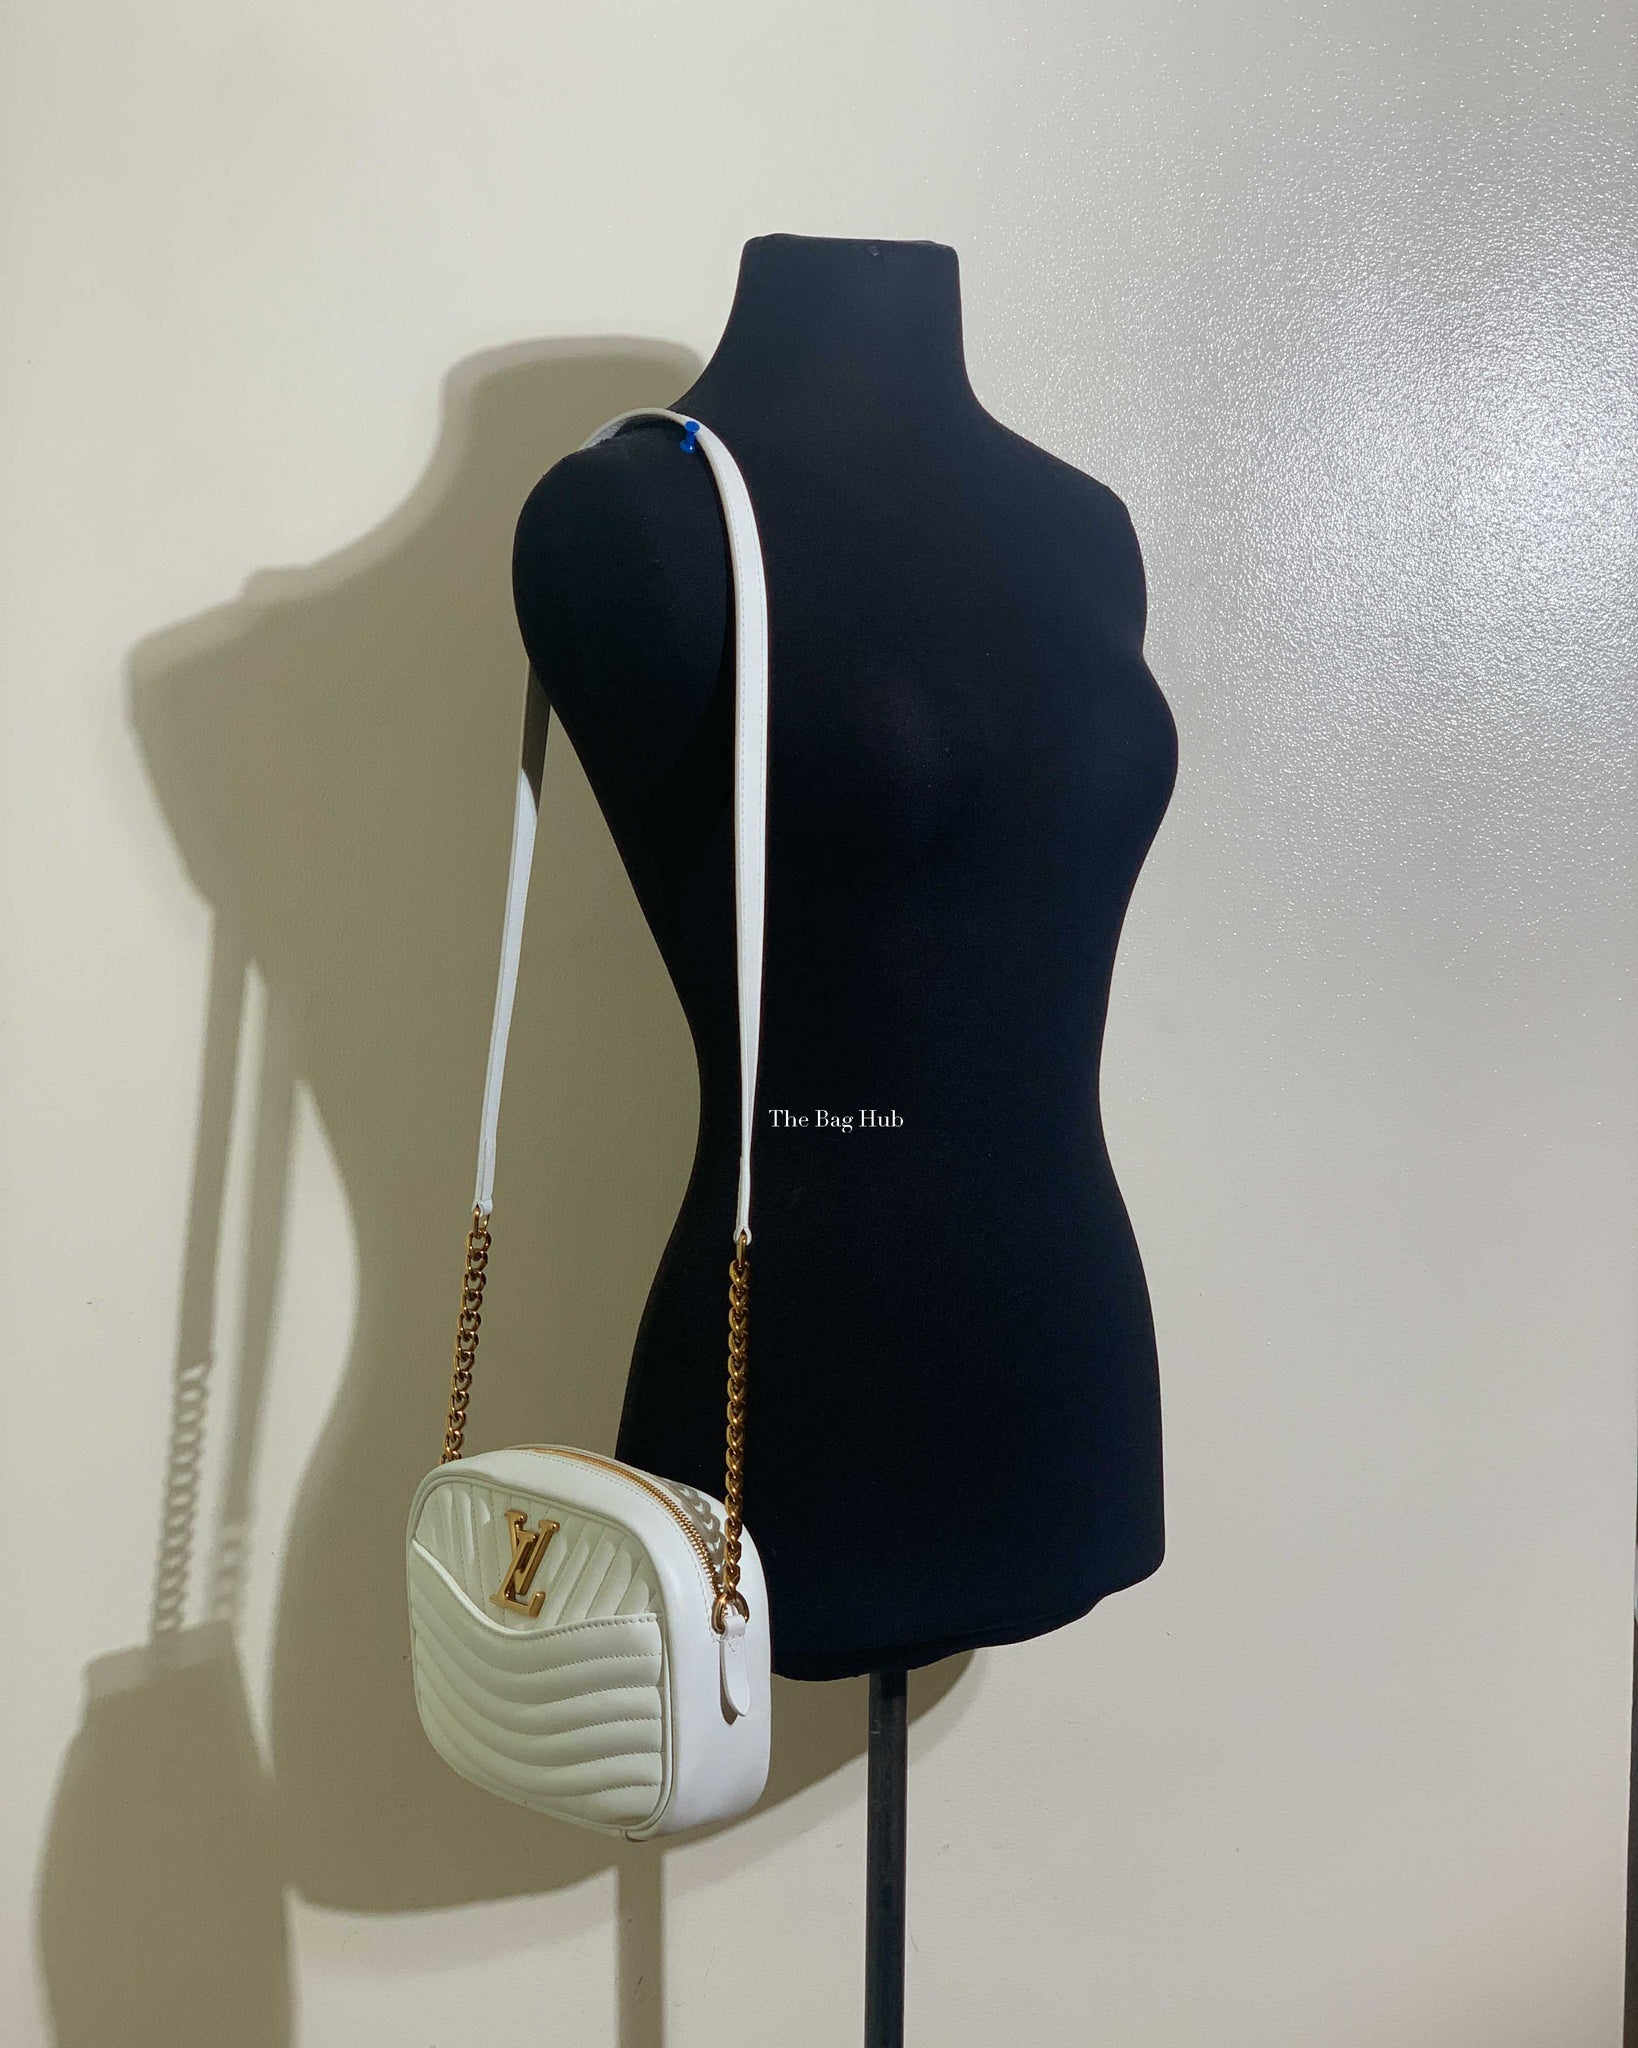 Louis Vuitton White New Wave Camera Bag